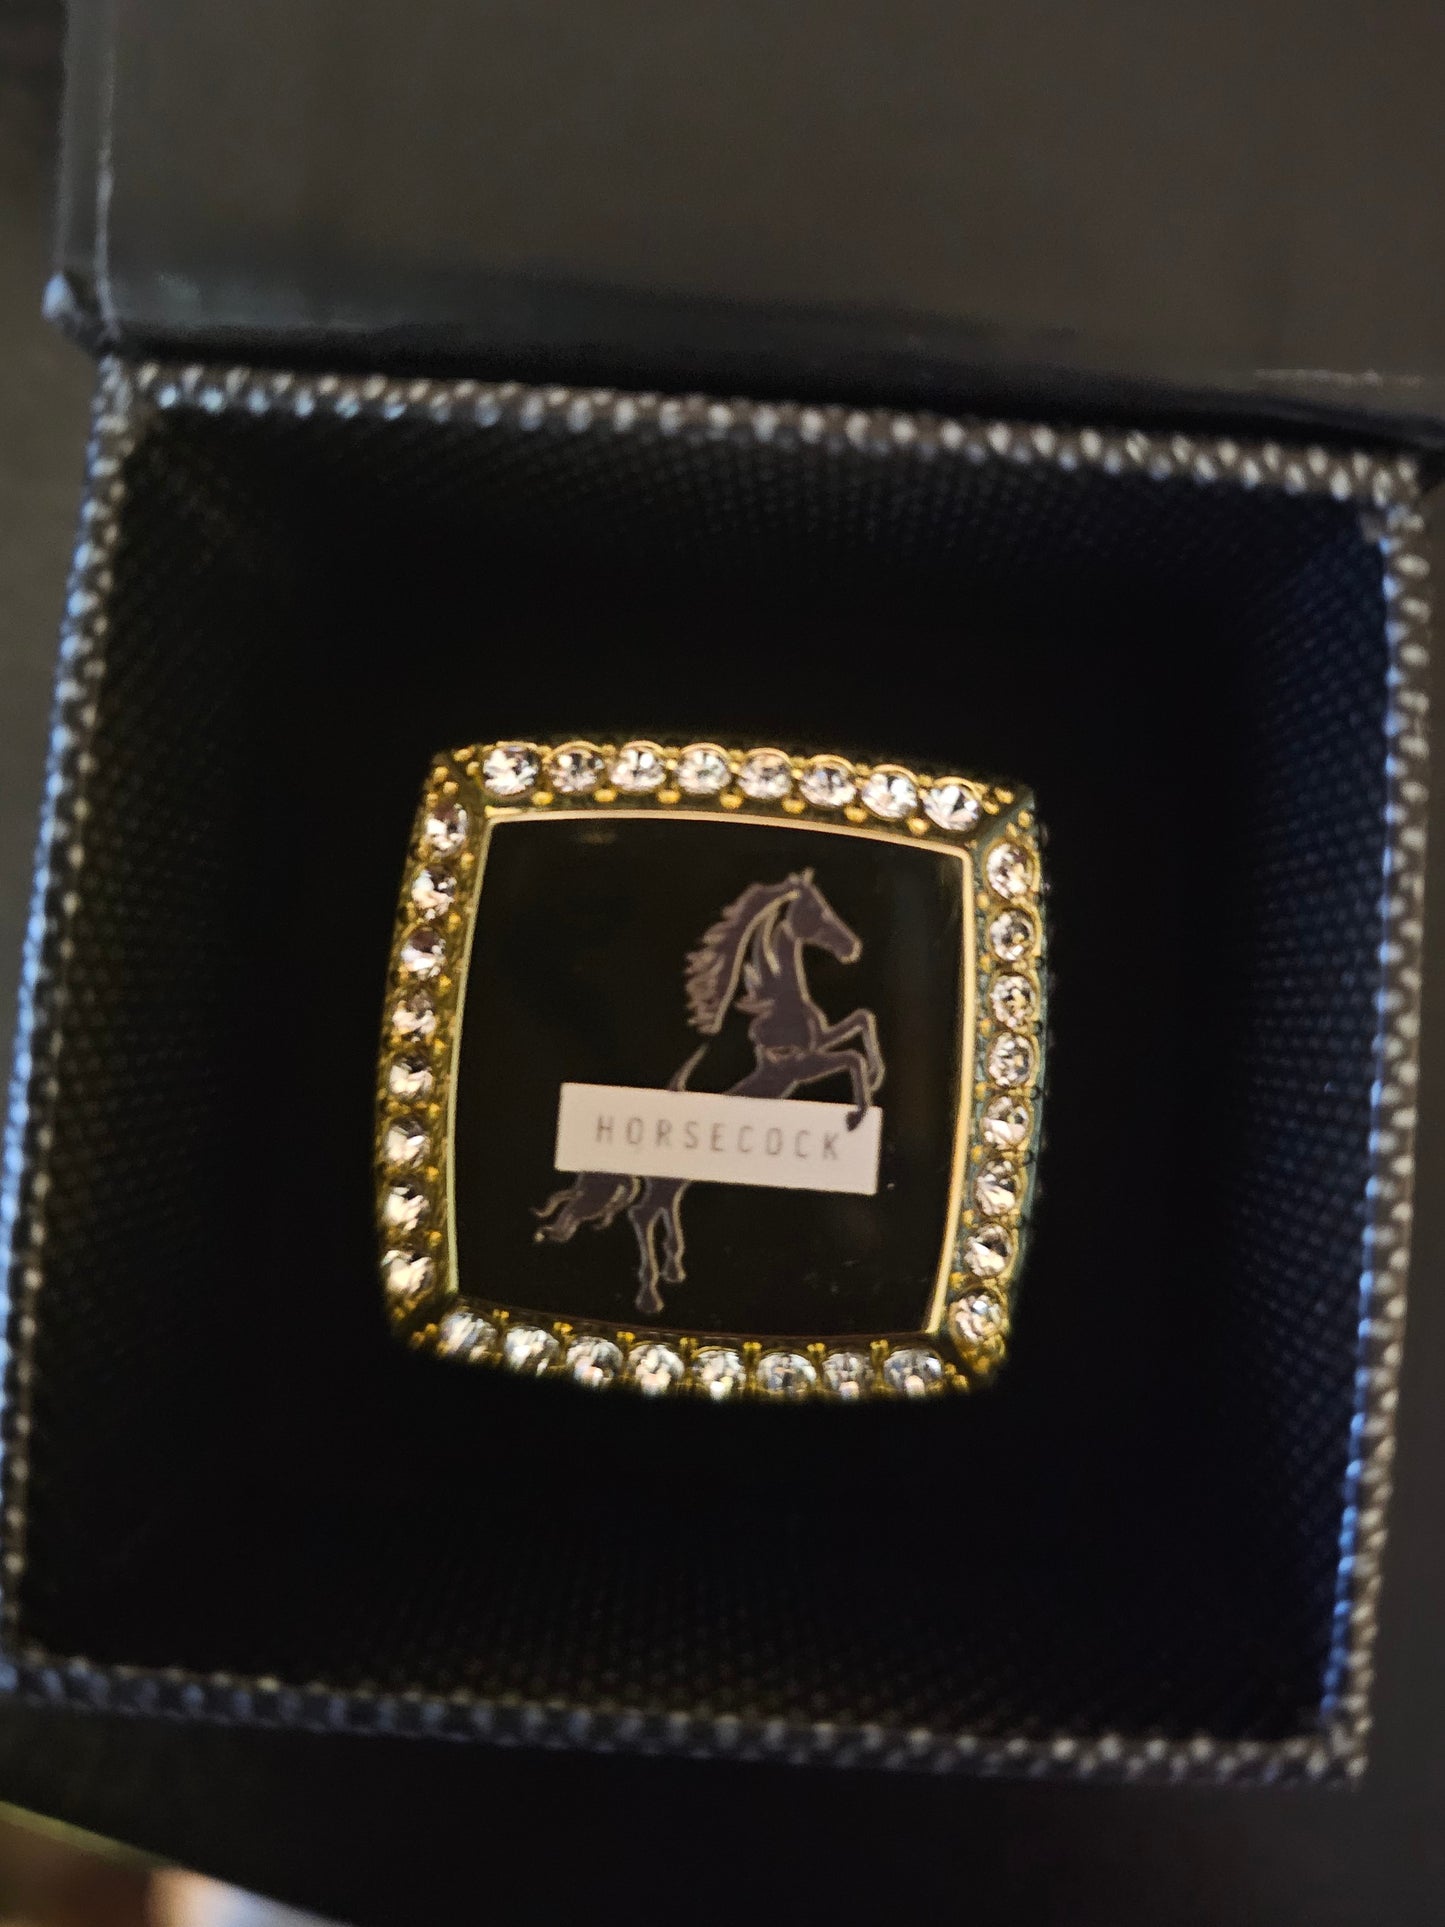 Horsecock Championship Ring